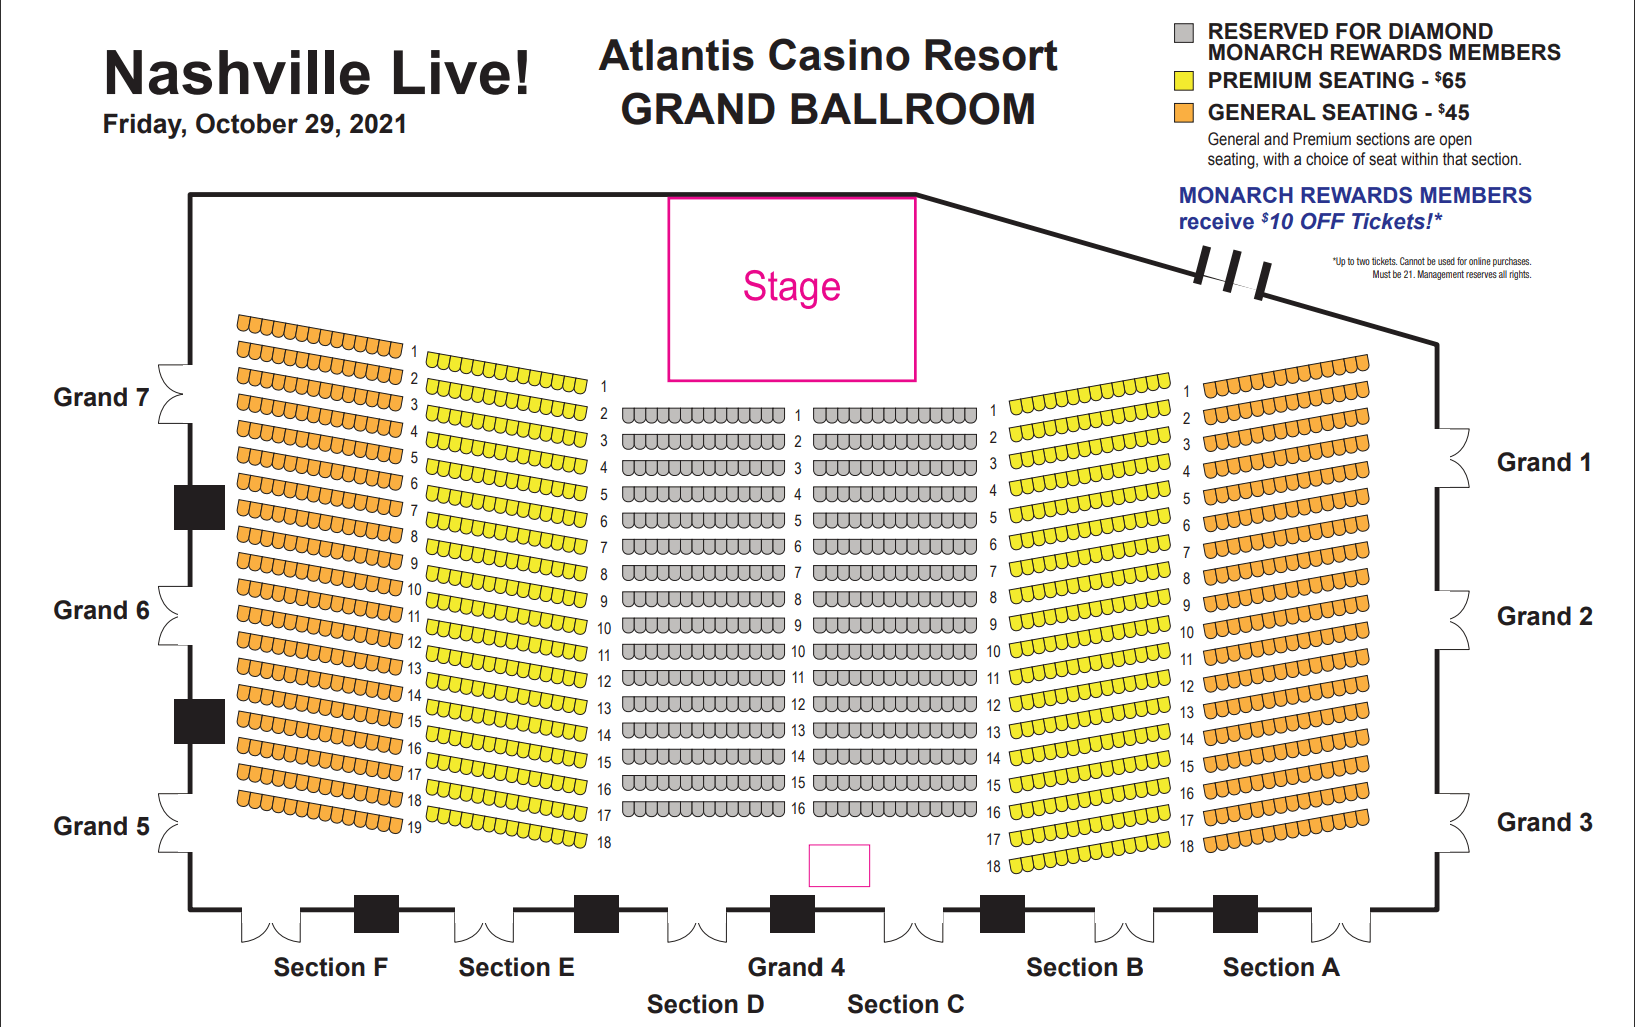 Seating Chart for Nashville Live!